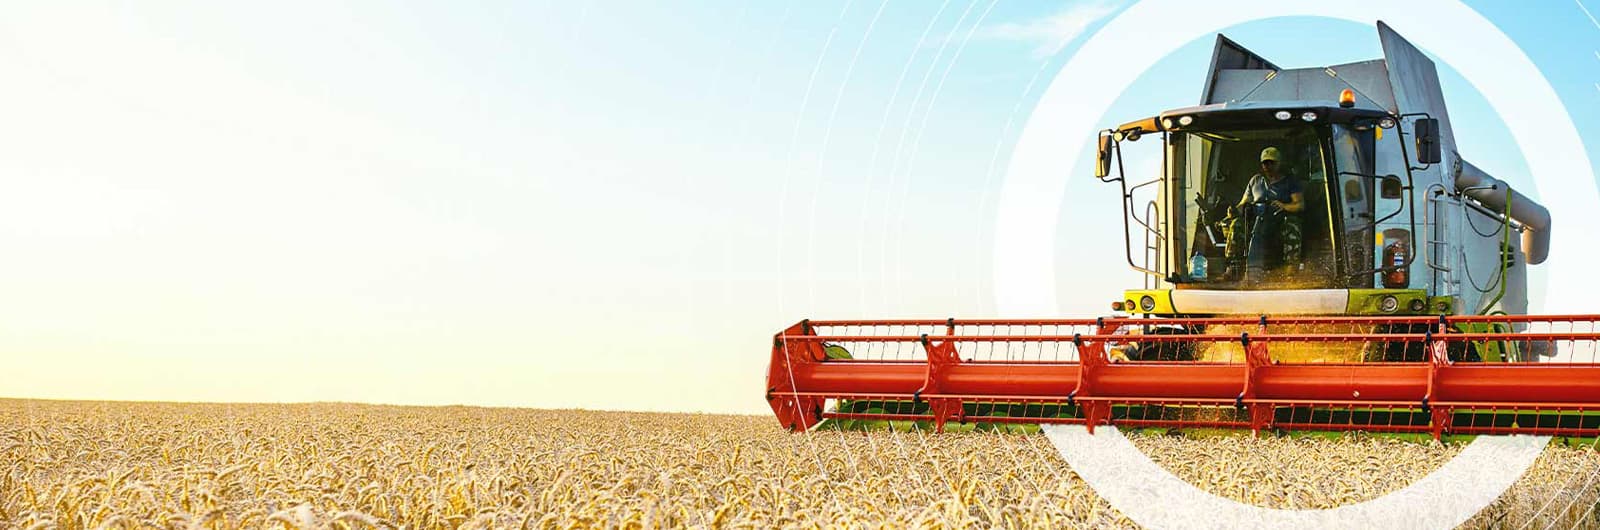 Agriculture: Combine harvester - desktop